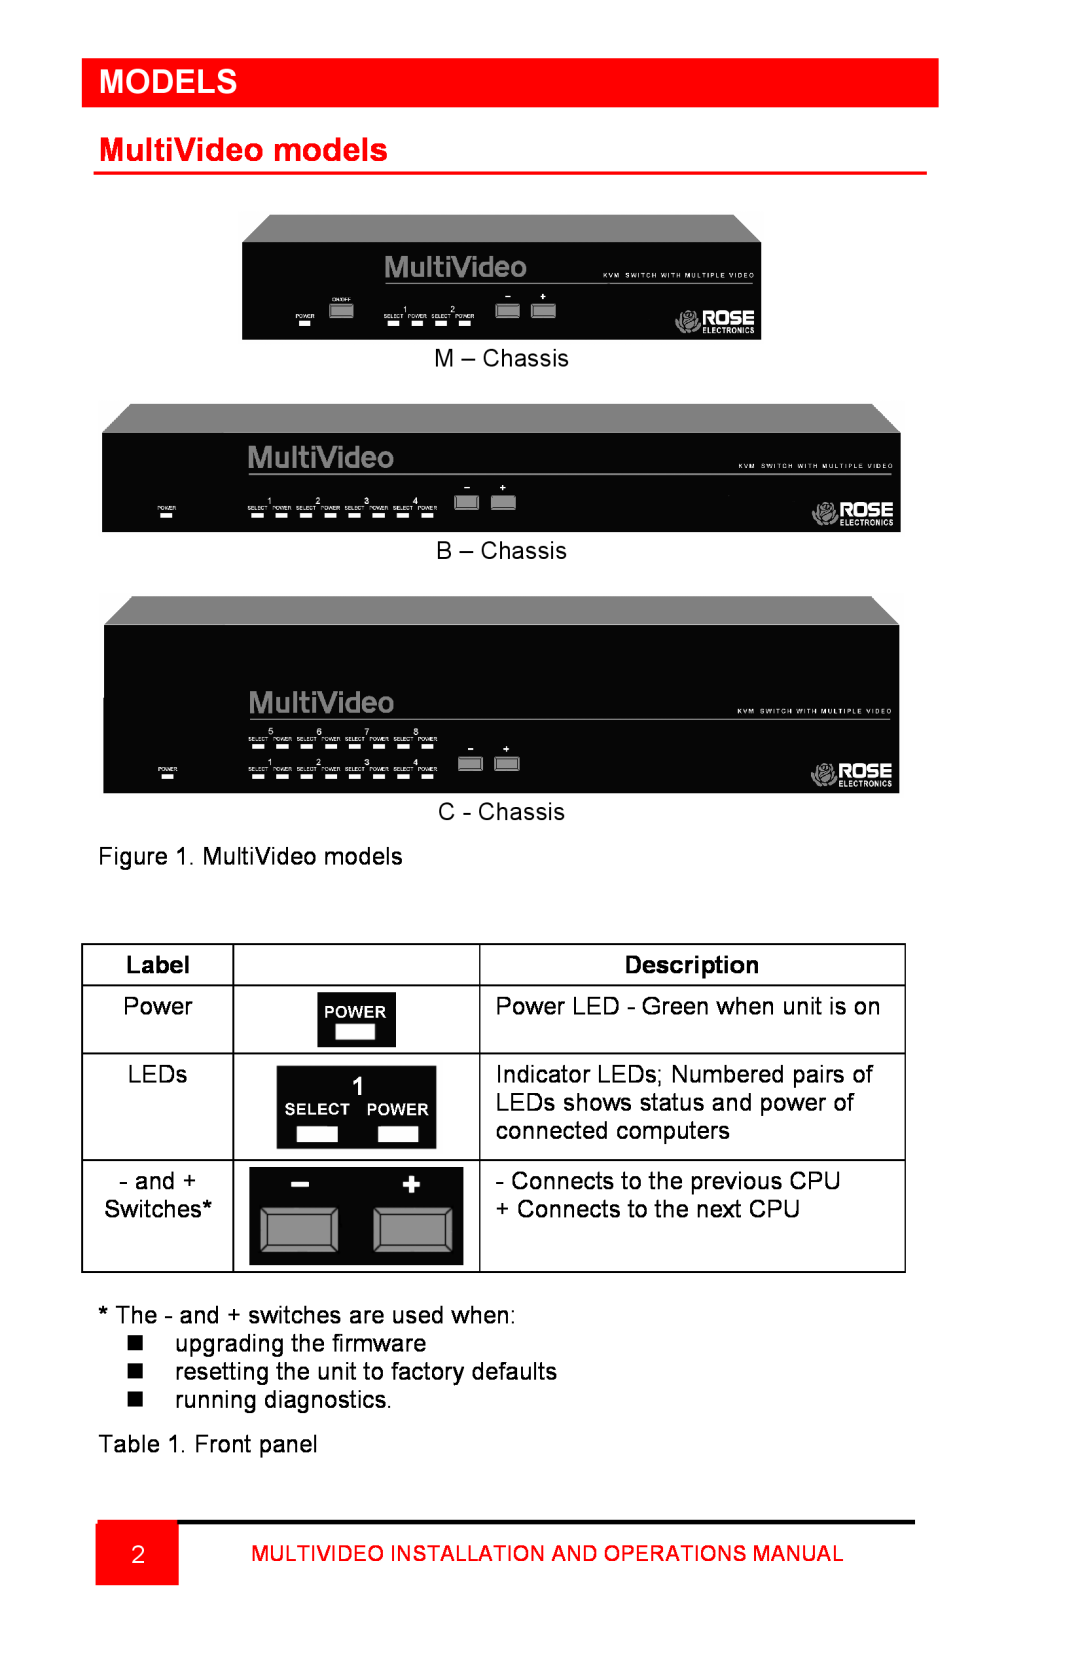 Rose electronic Video Easyware manual Models, MultiVideo models 